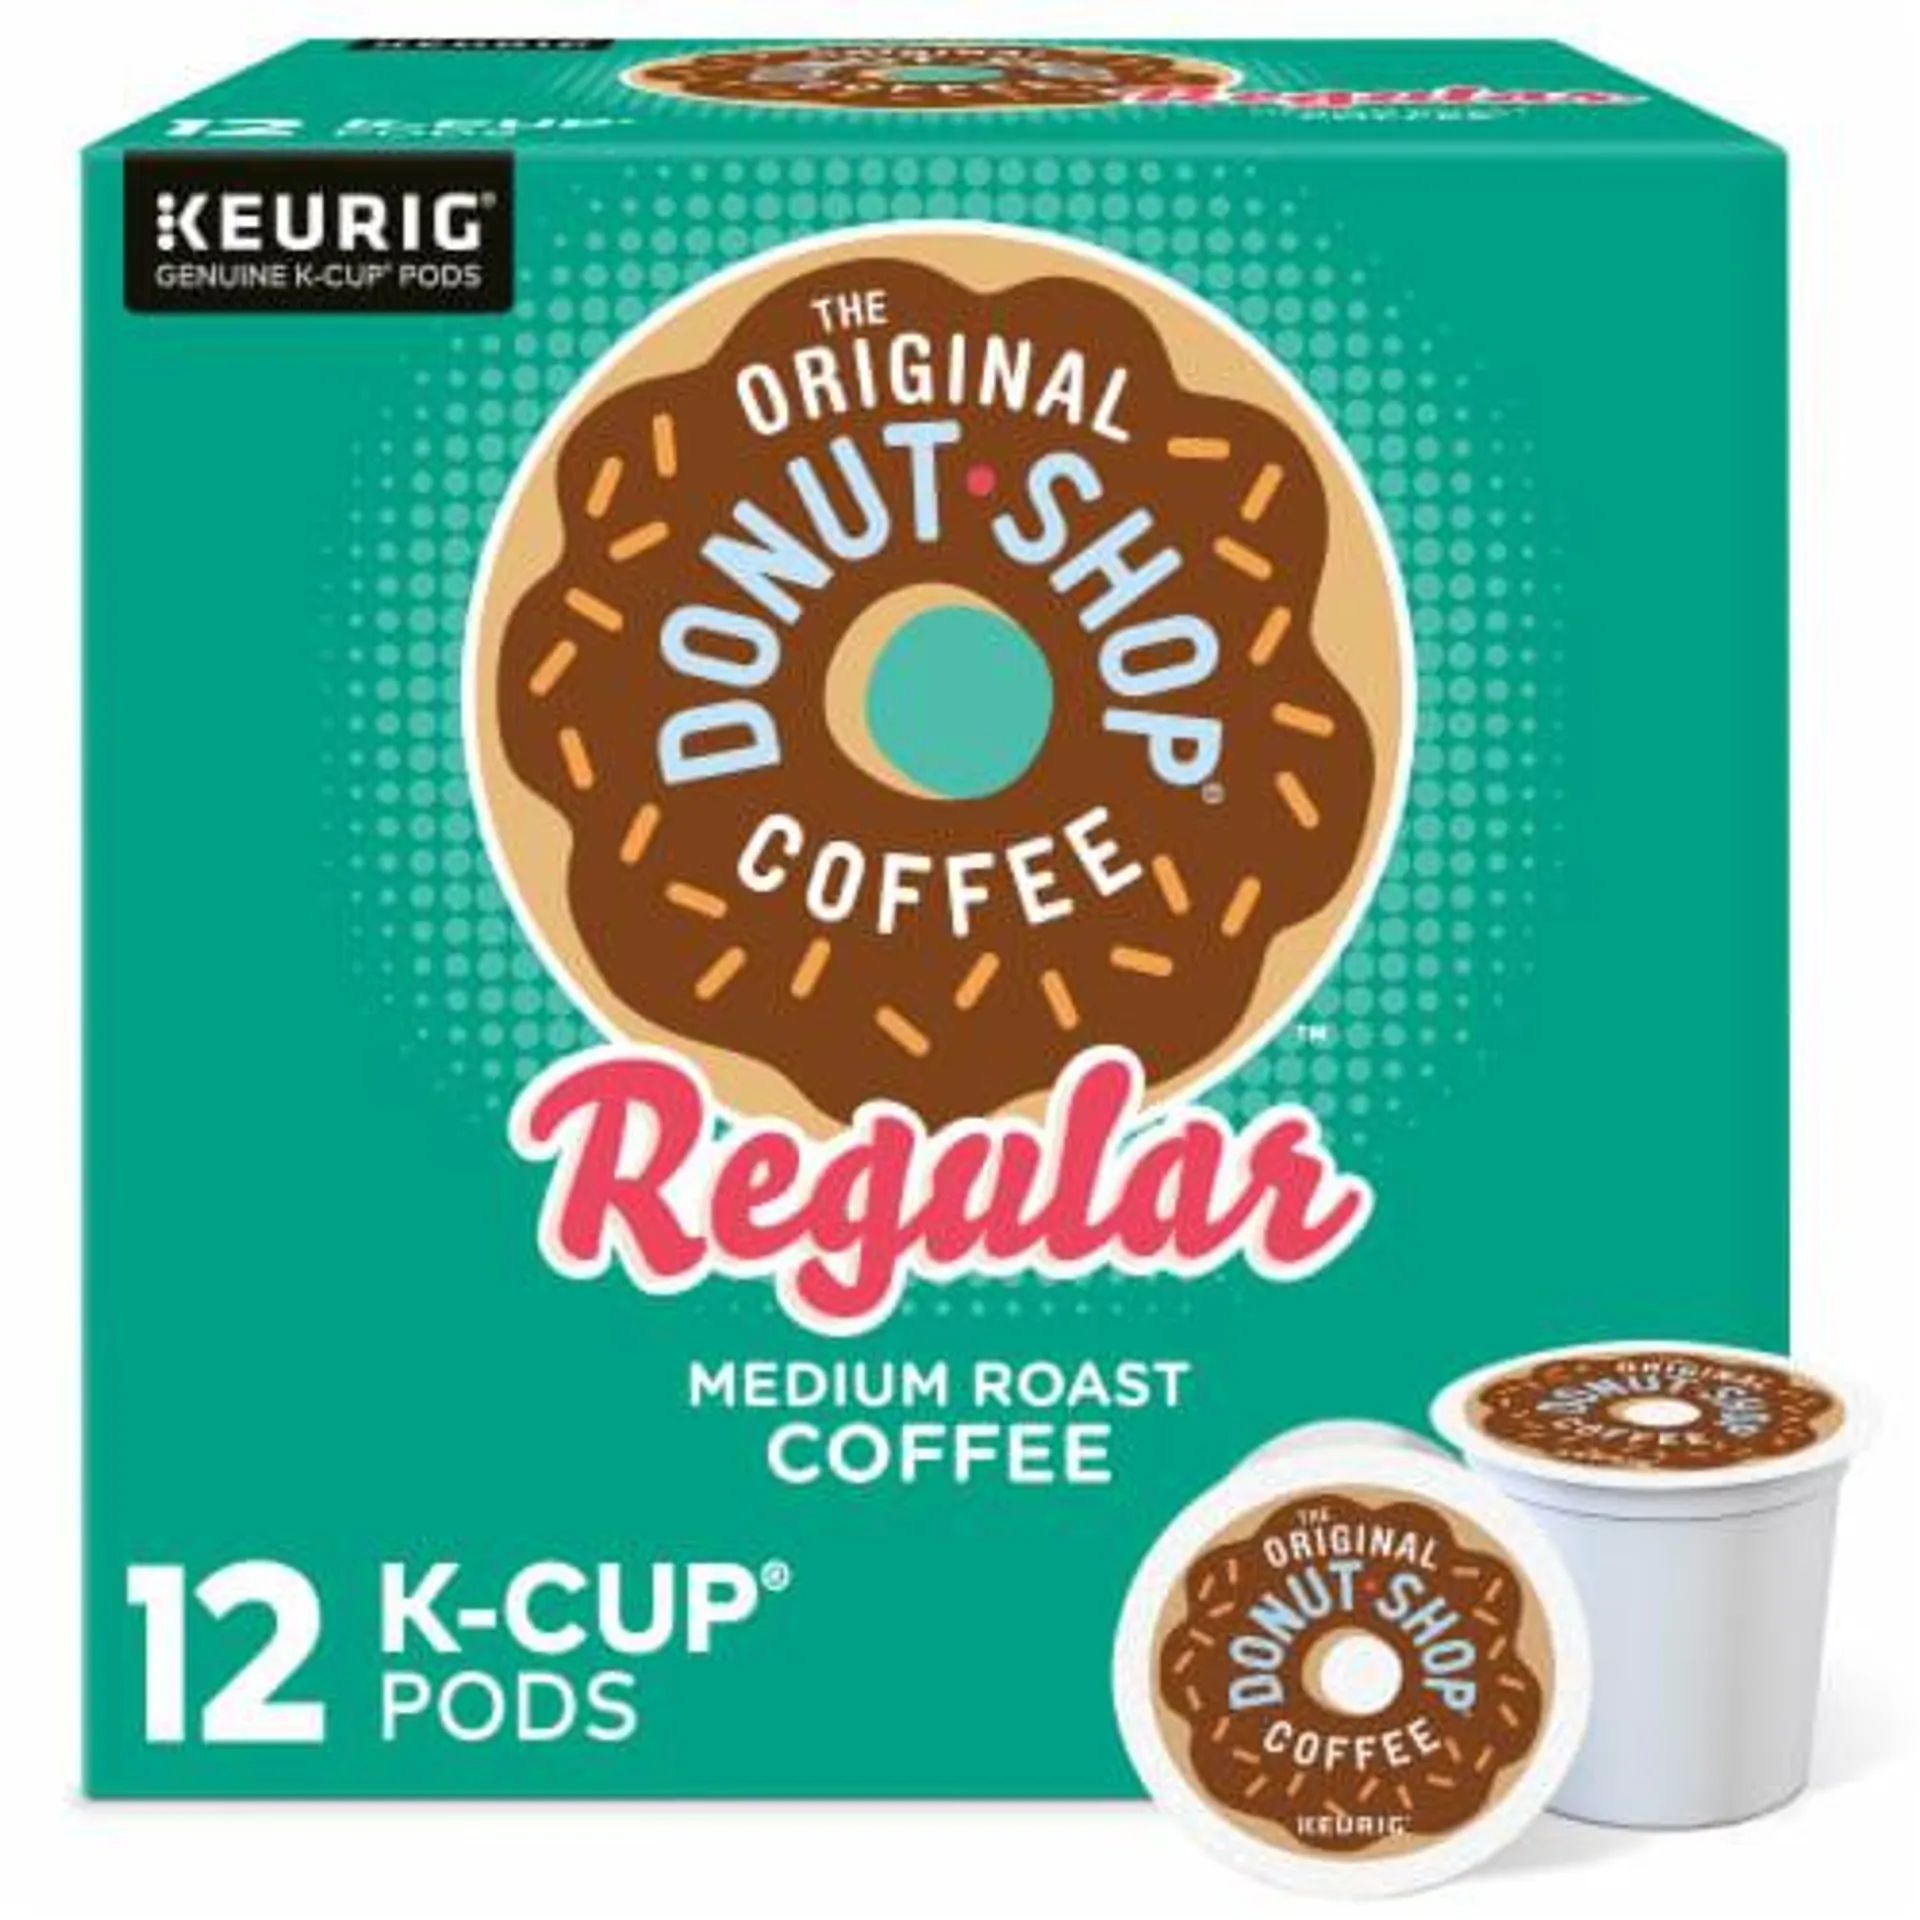 The Original Donut Shop™ Regular Medium Roast Coffee K-Cup Pods